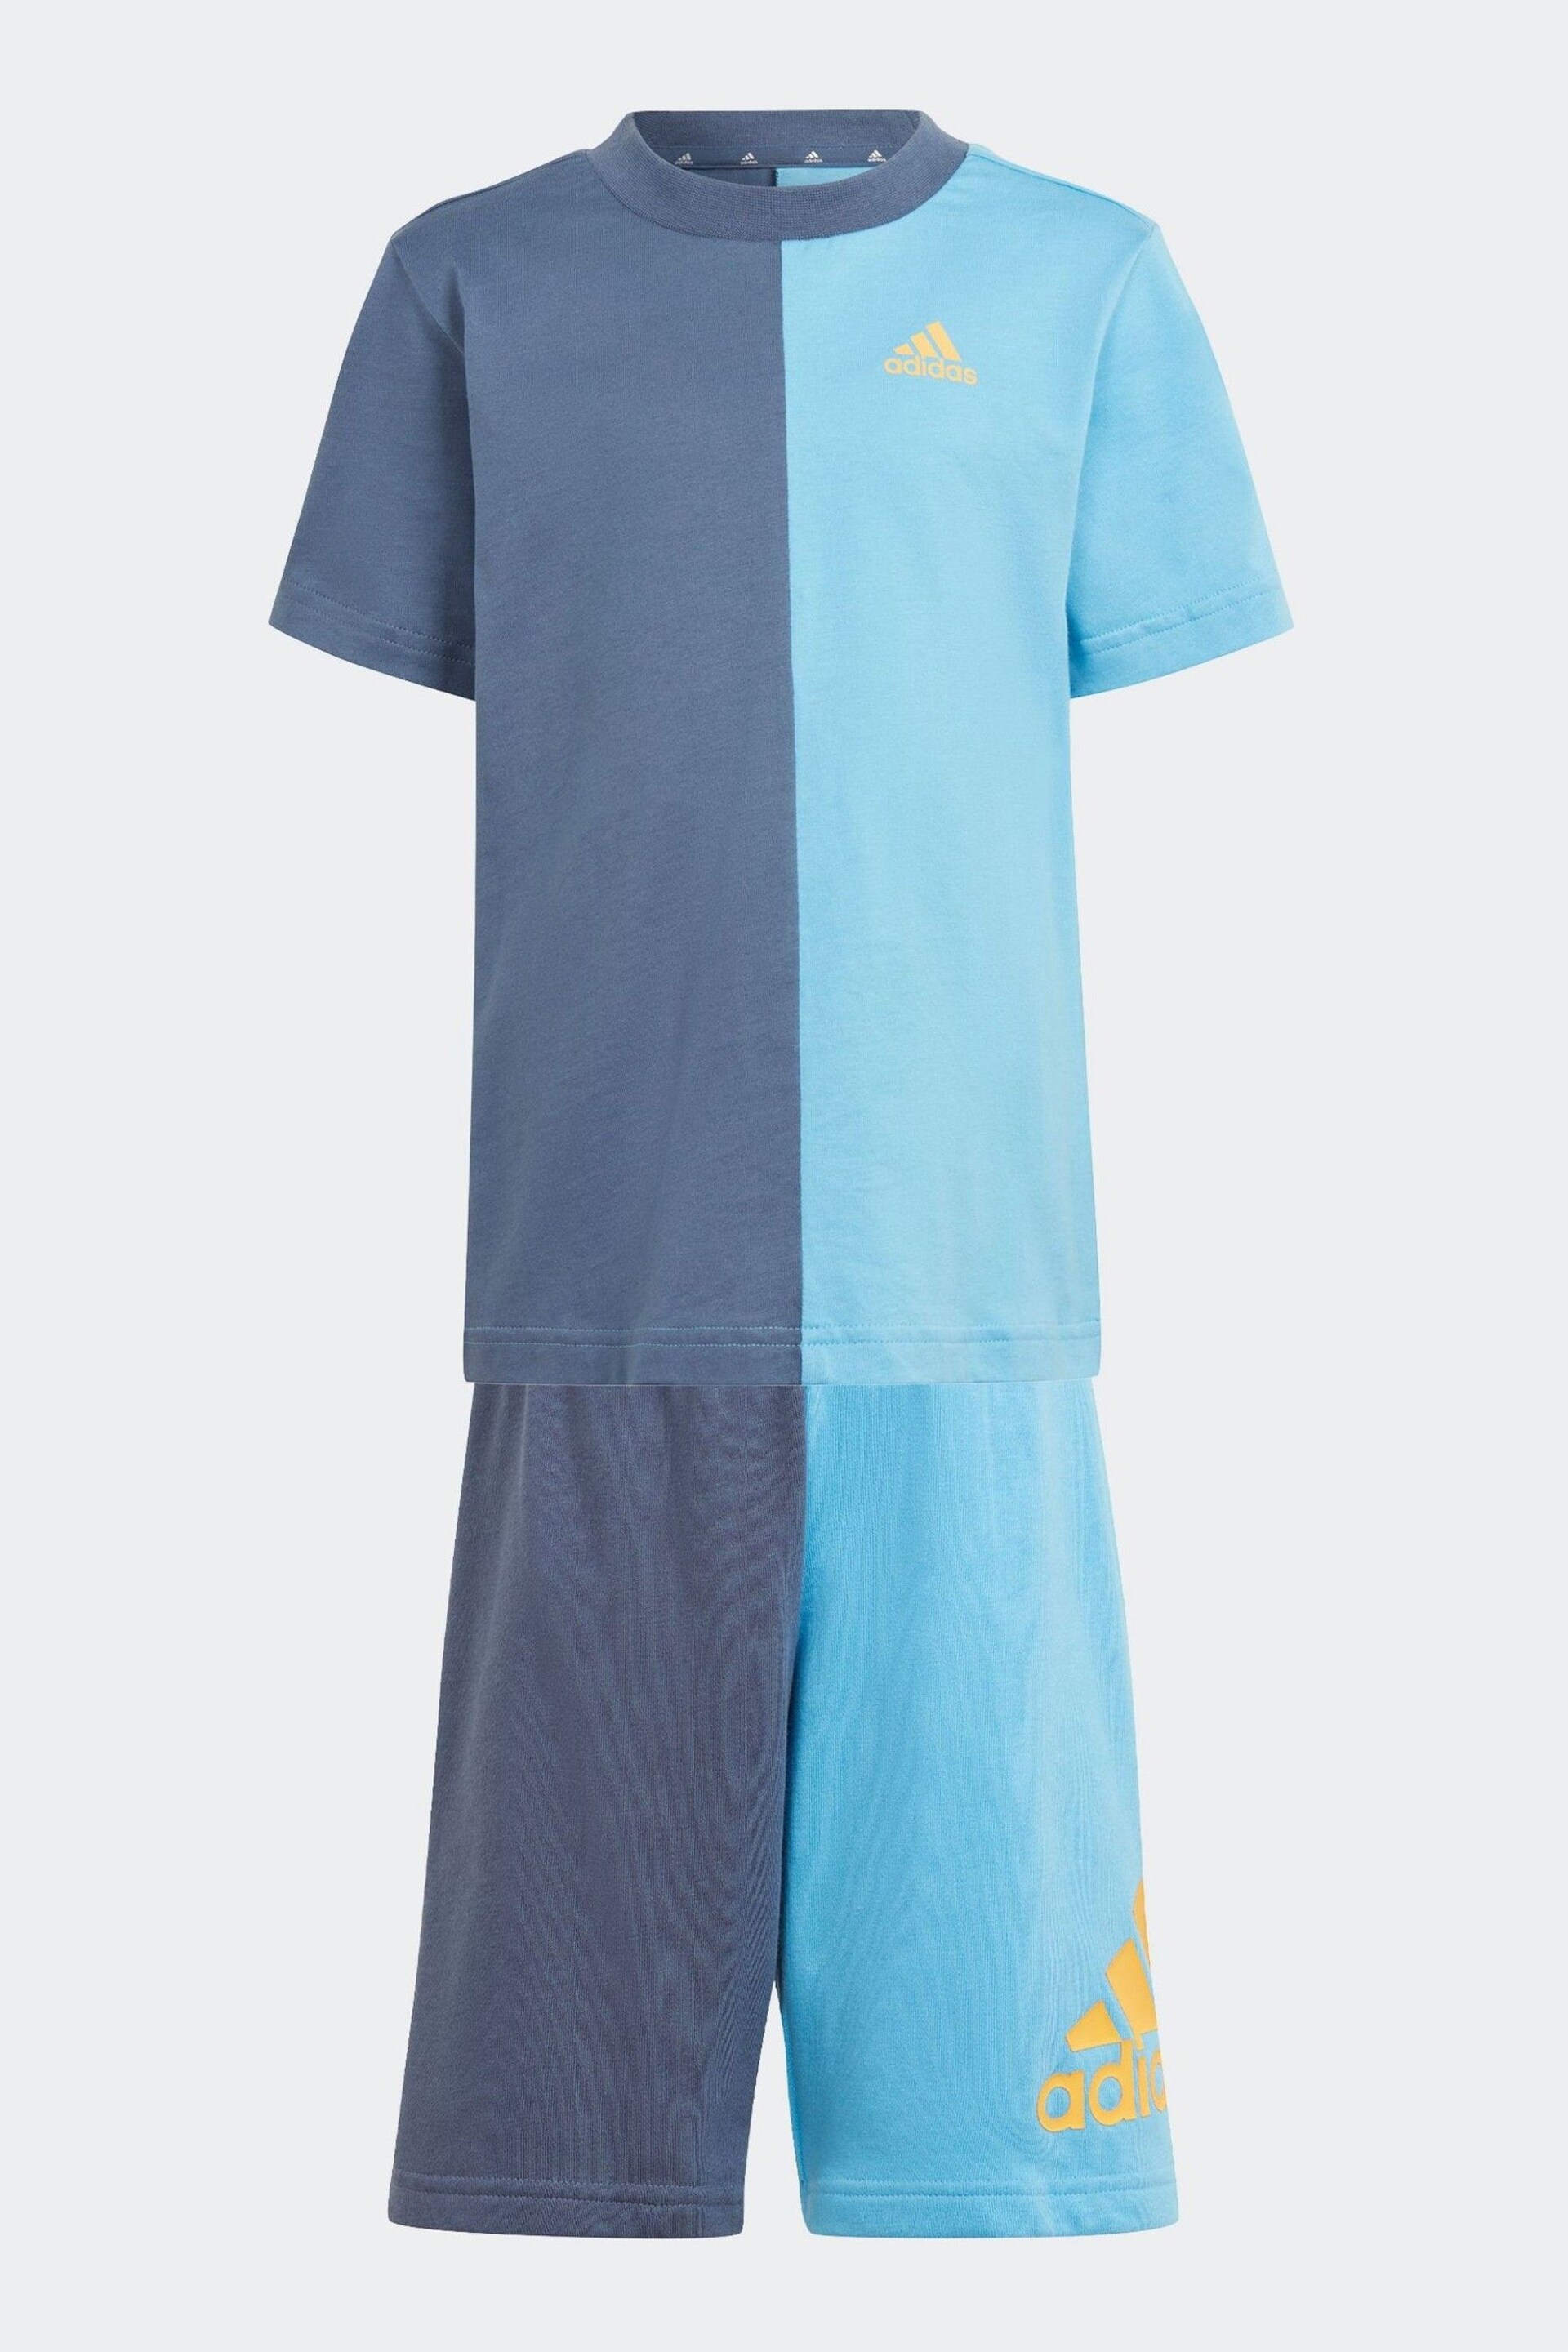 adidas Blue Sportswear T-Shirt and Shorts Set - Image 6 of 11